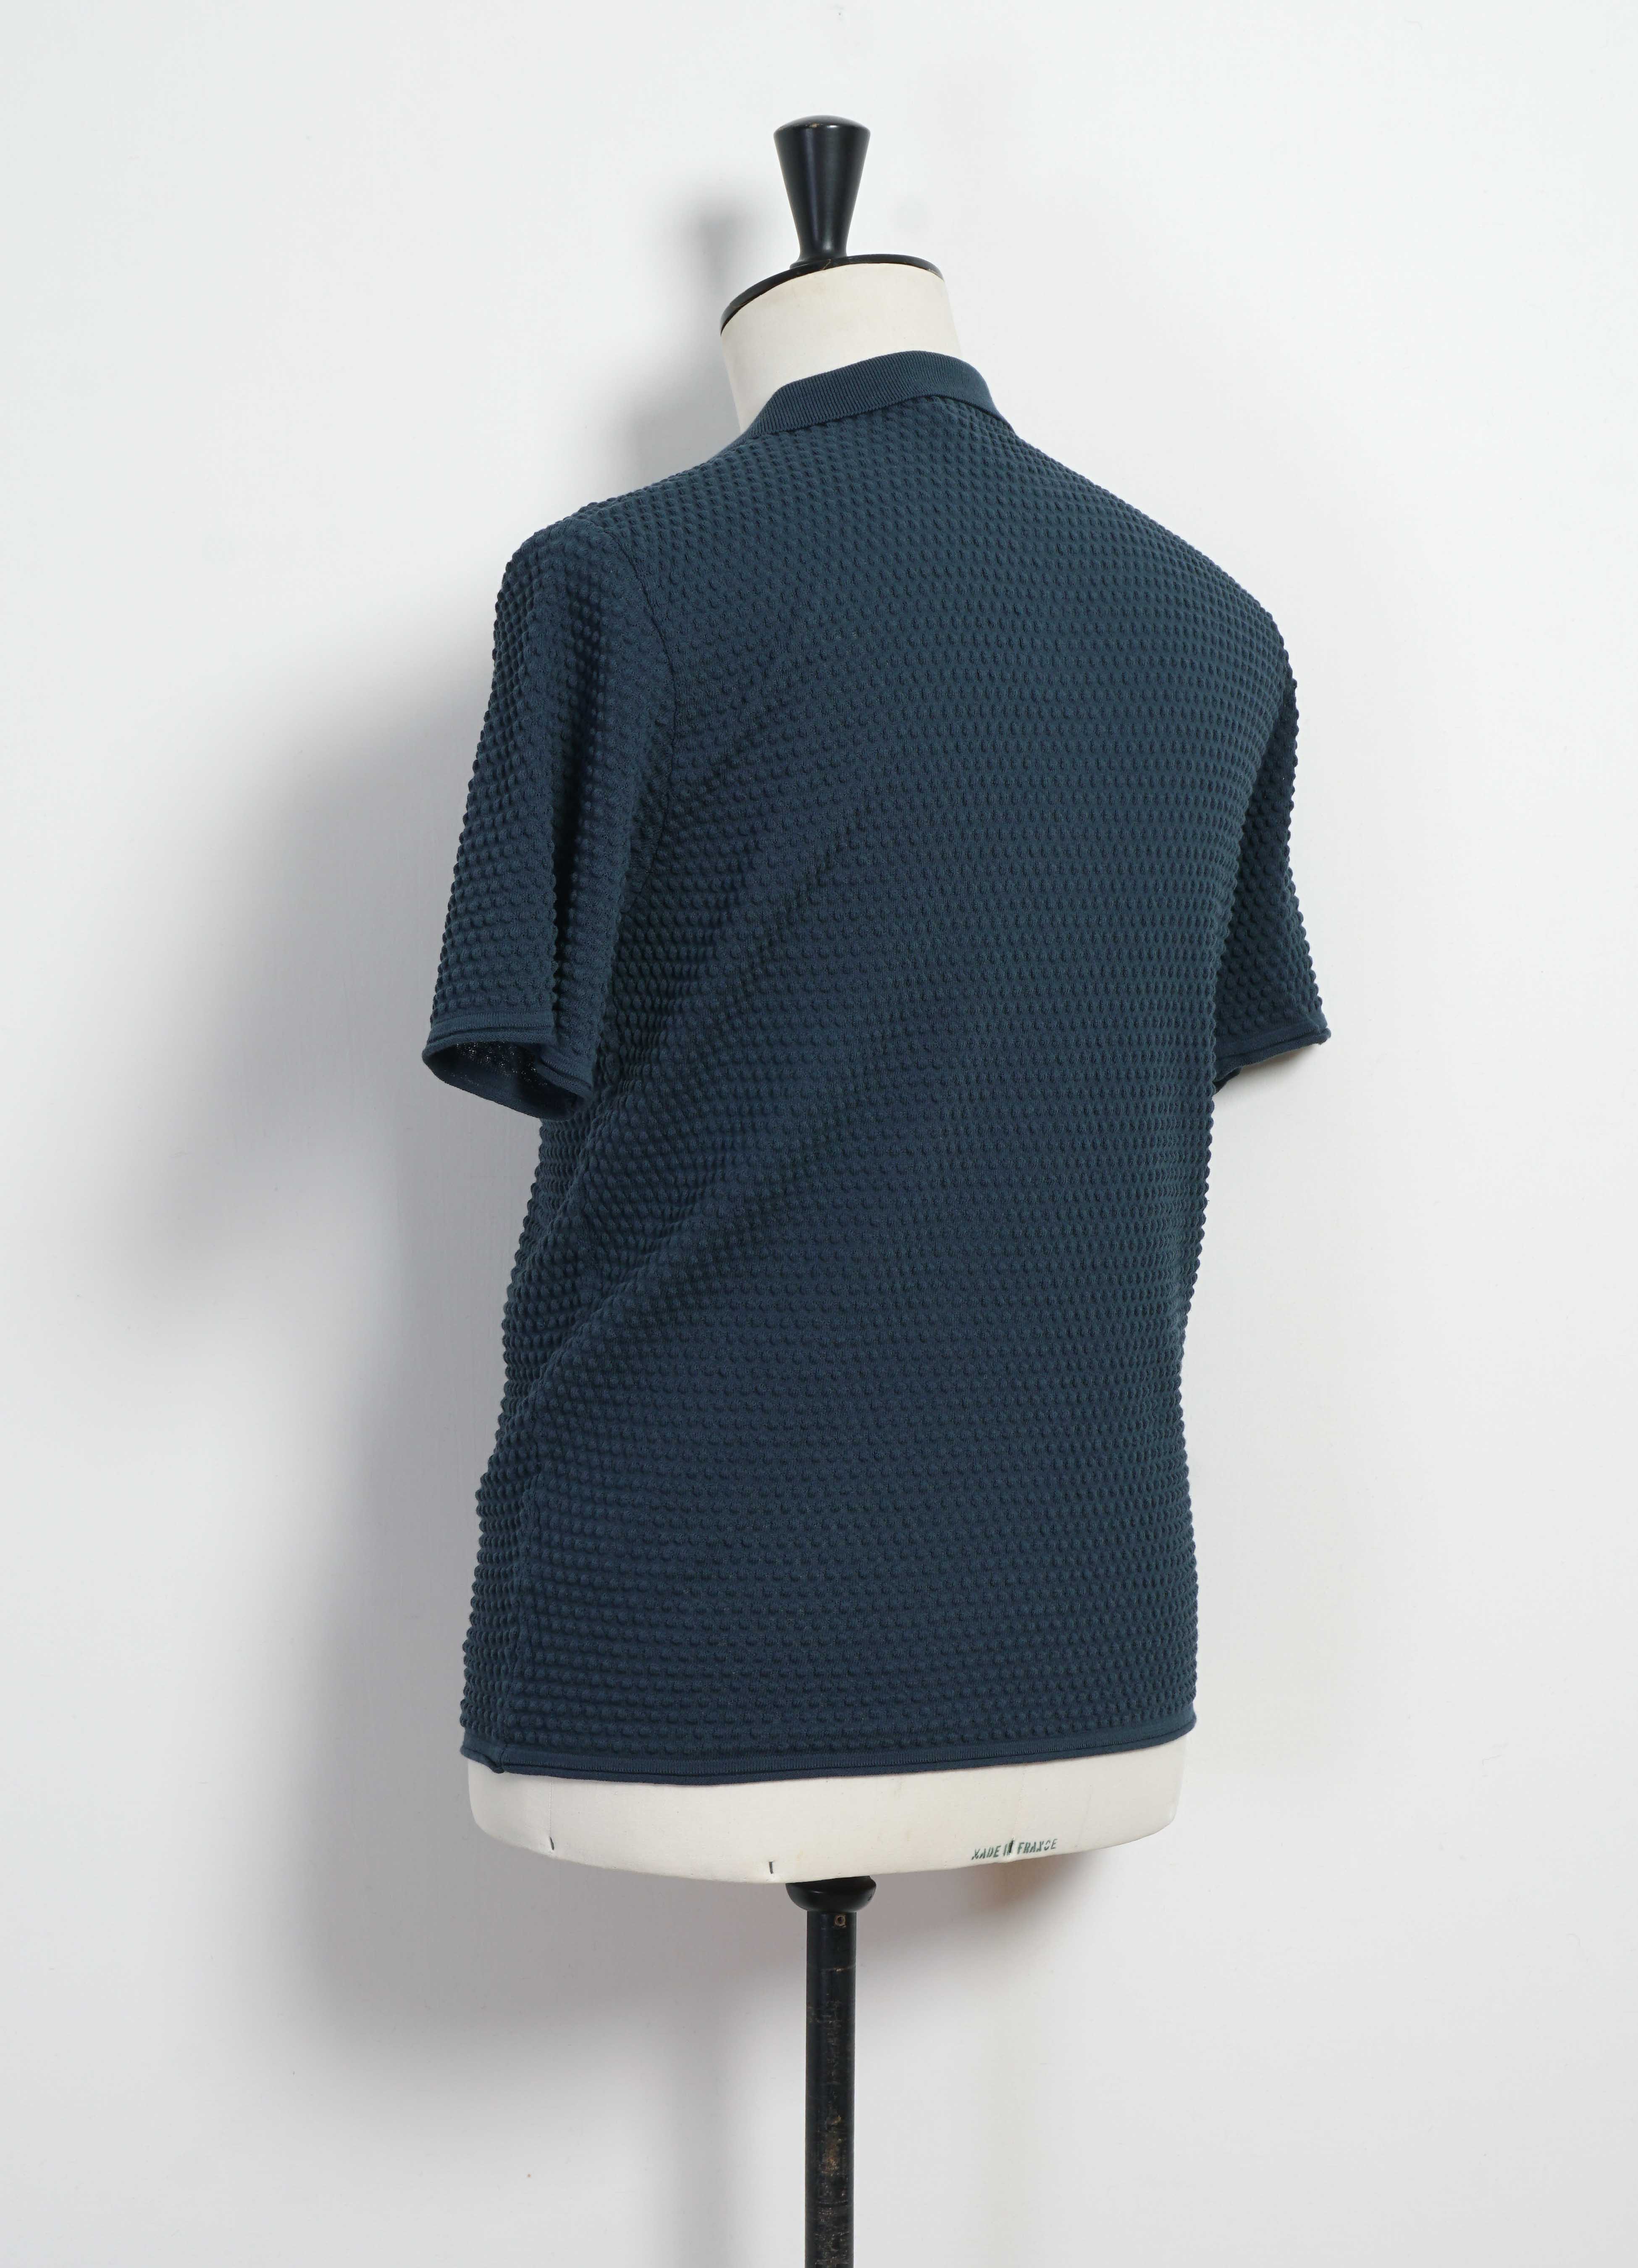 POLO | Short Sleeve Spot Knit Shirt | Ombra